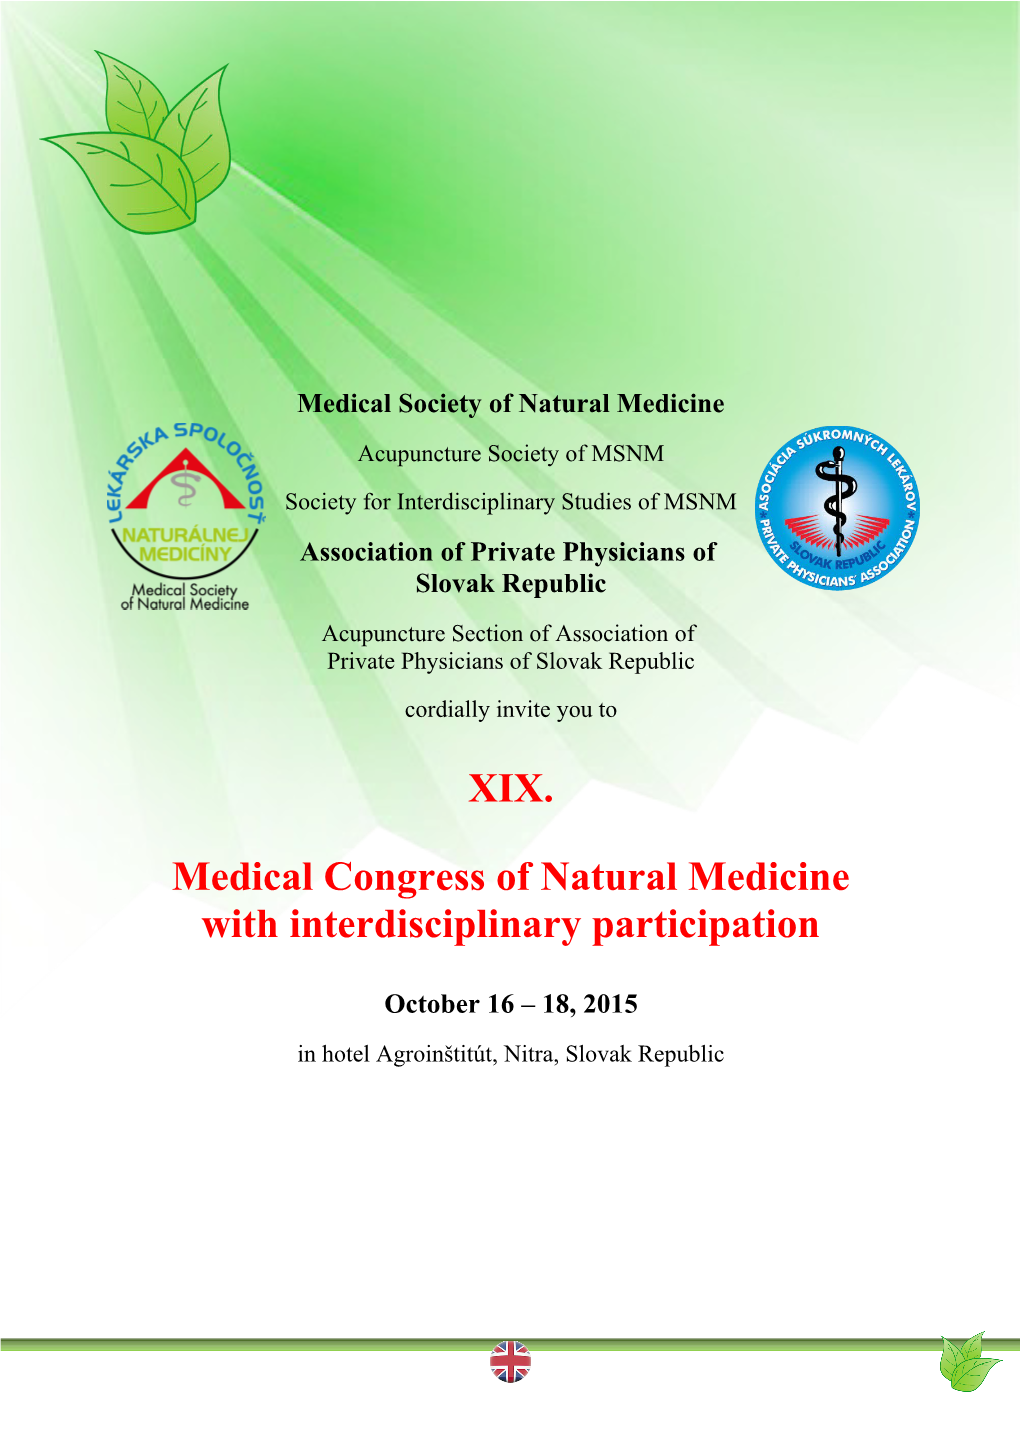 Invitation to the Congress of Natural Medicine